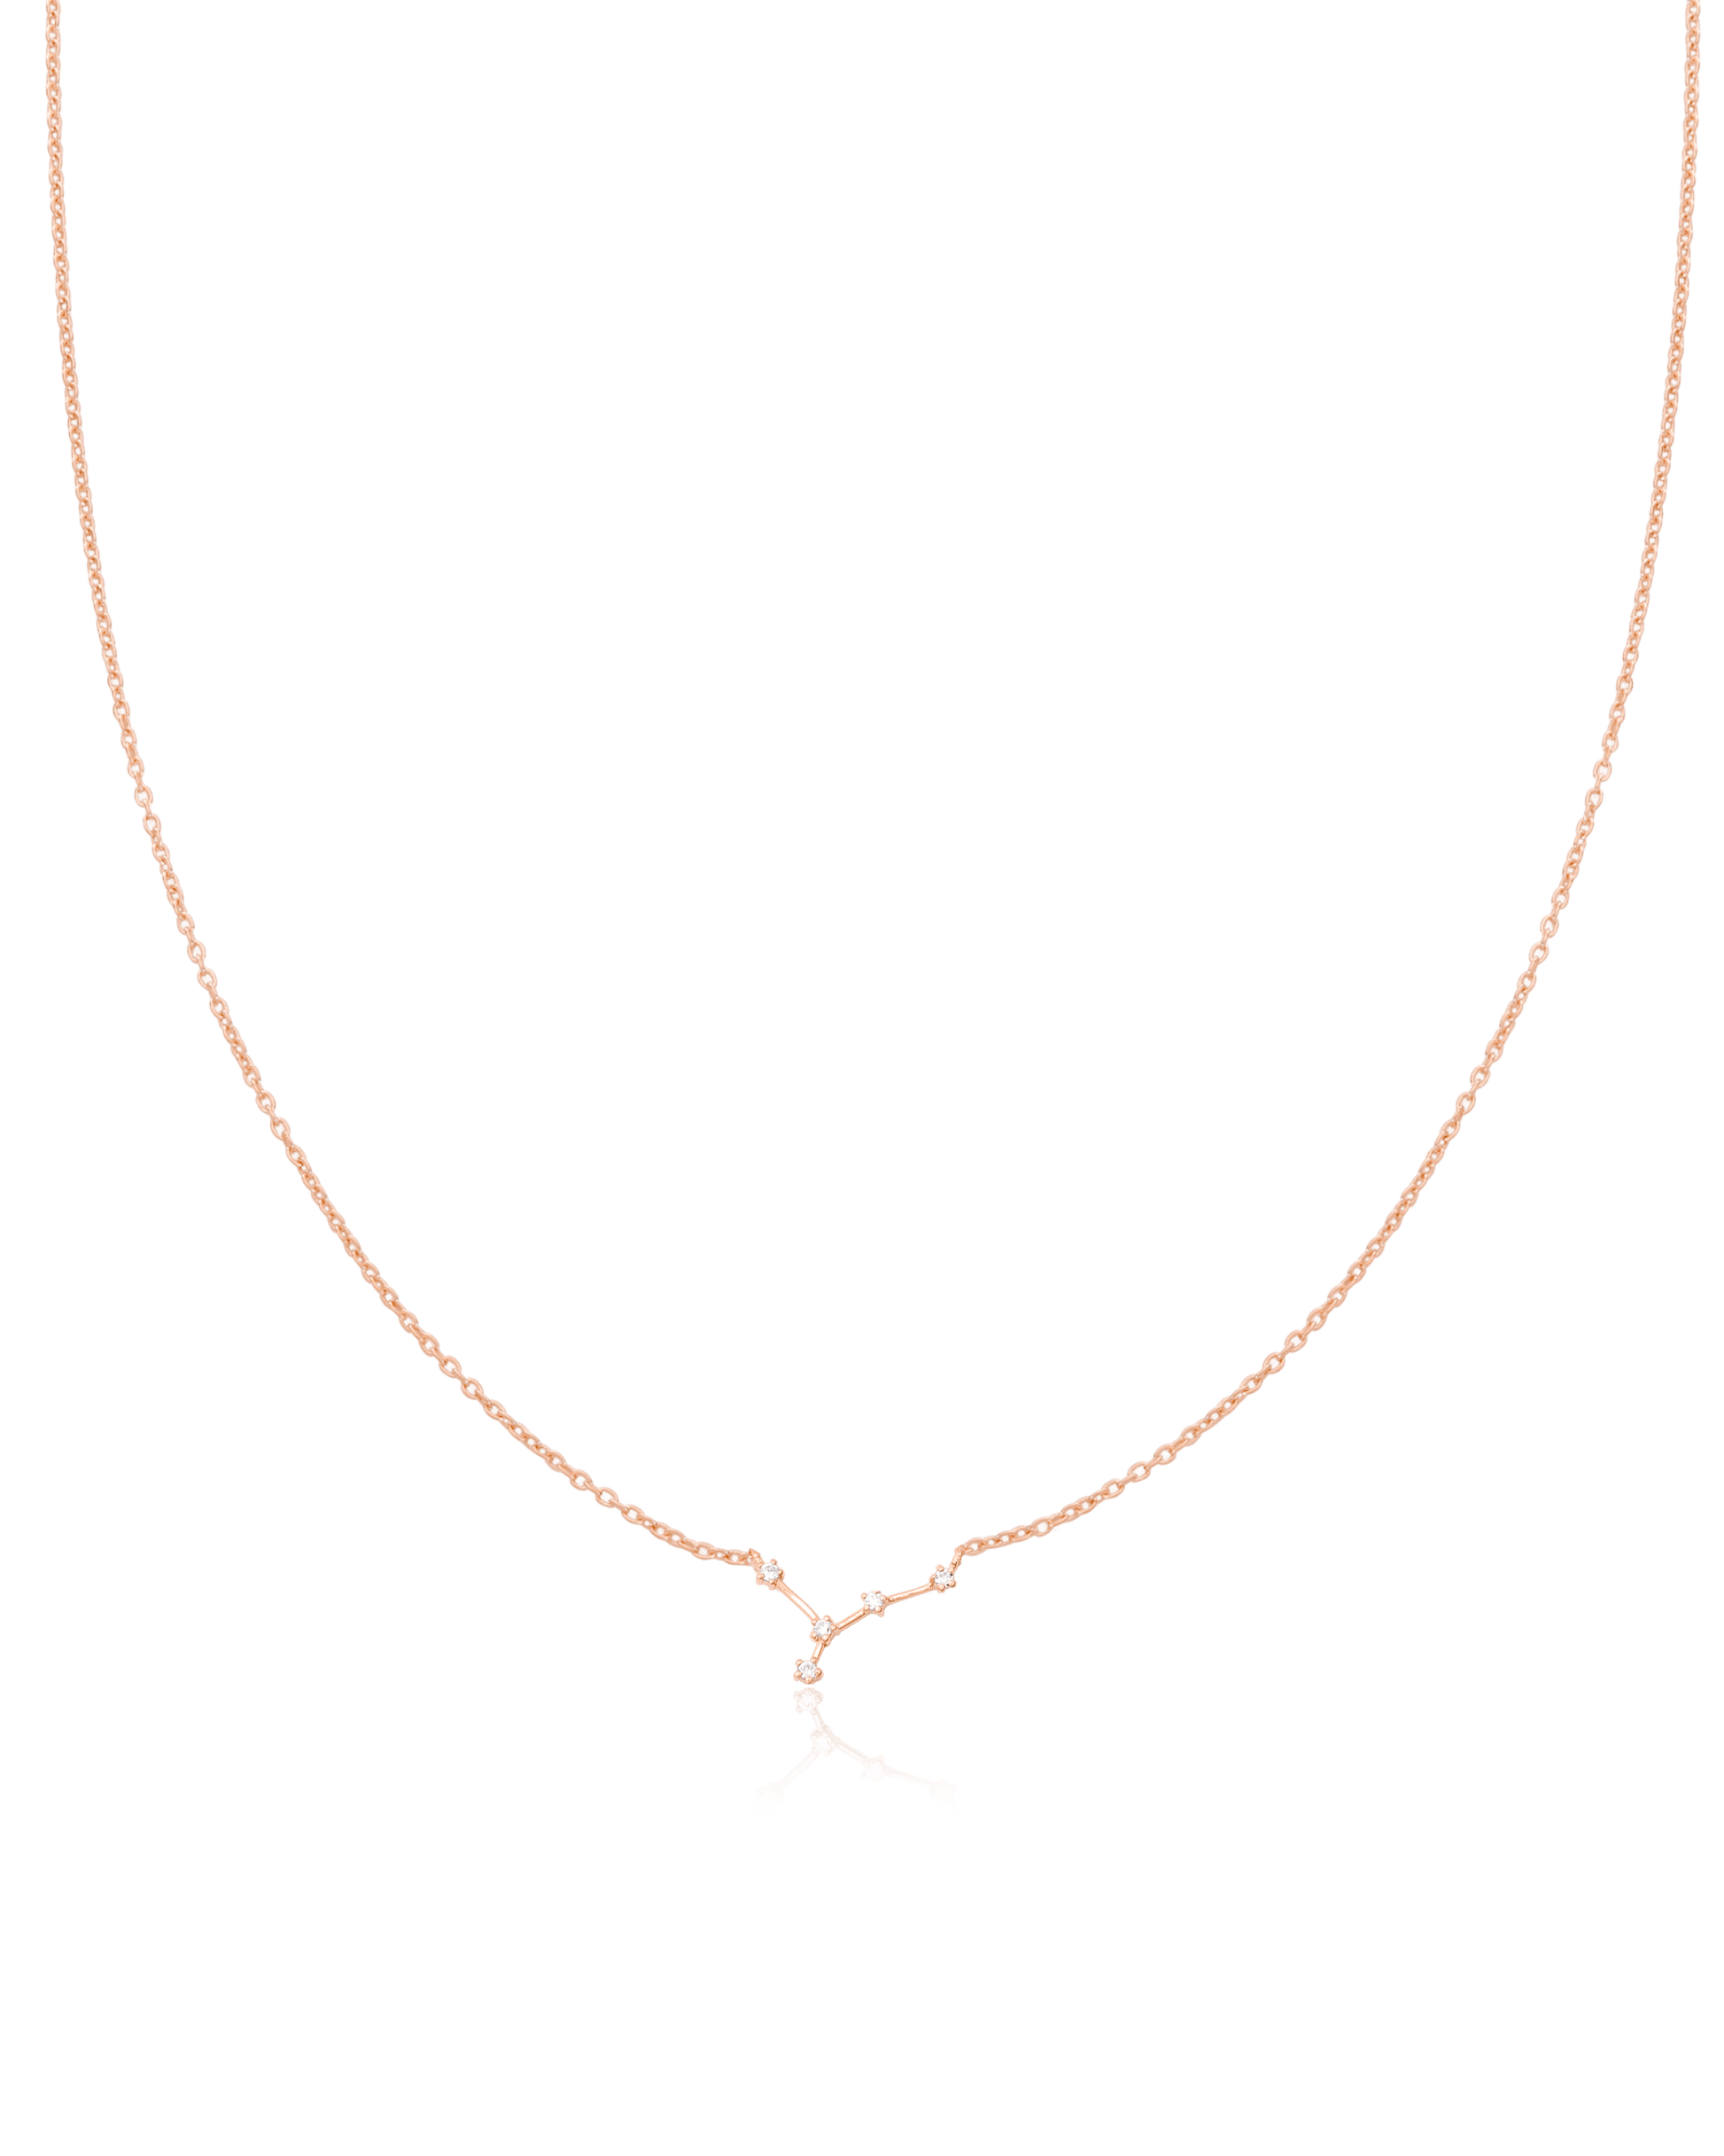 Cancer Constellation Necklace - 18K Gold Vermeil Necklaces magal-dev 